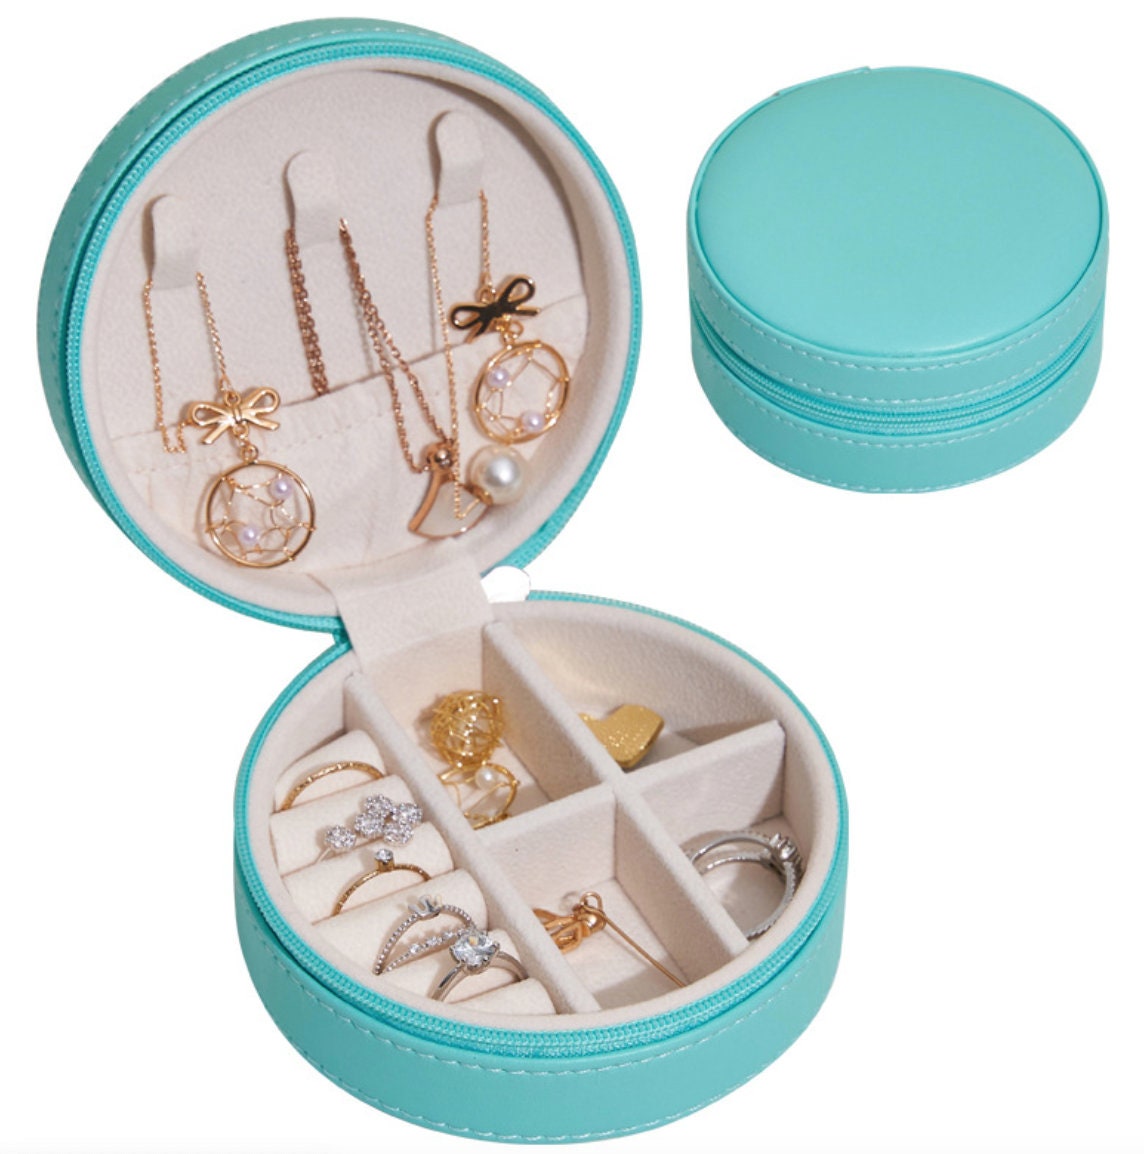 minimalist jewelry box interior in Tiffany Blue Teal color